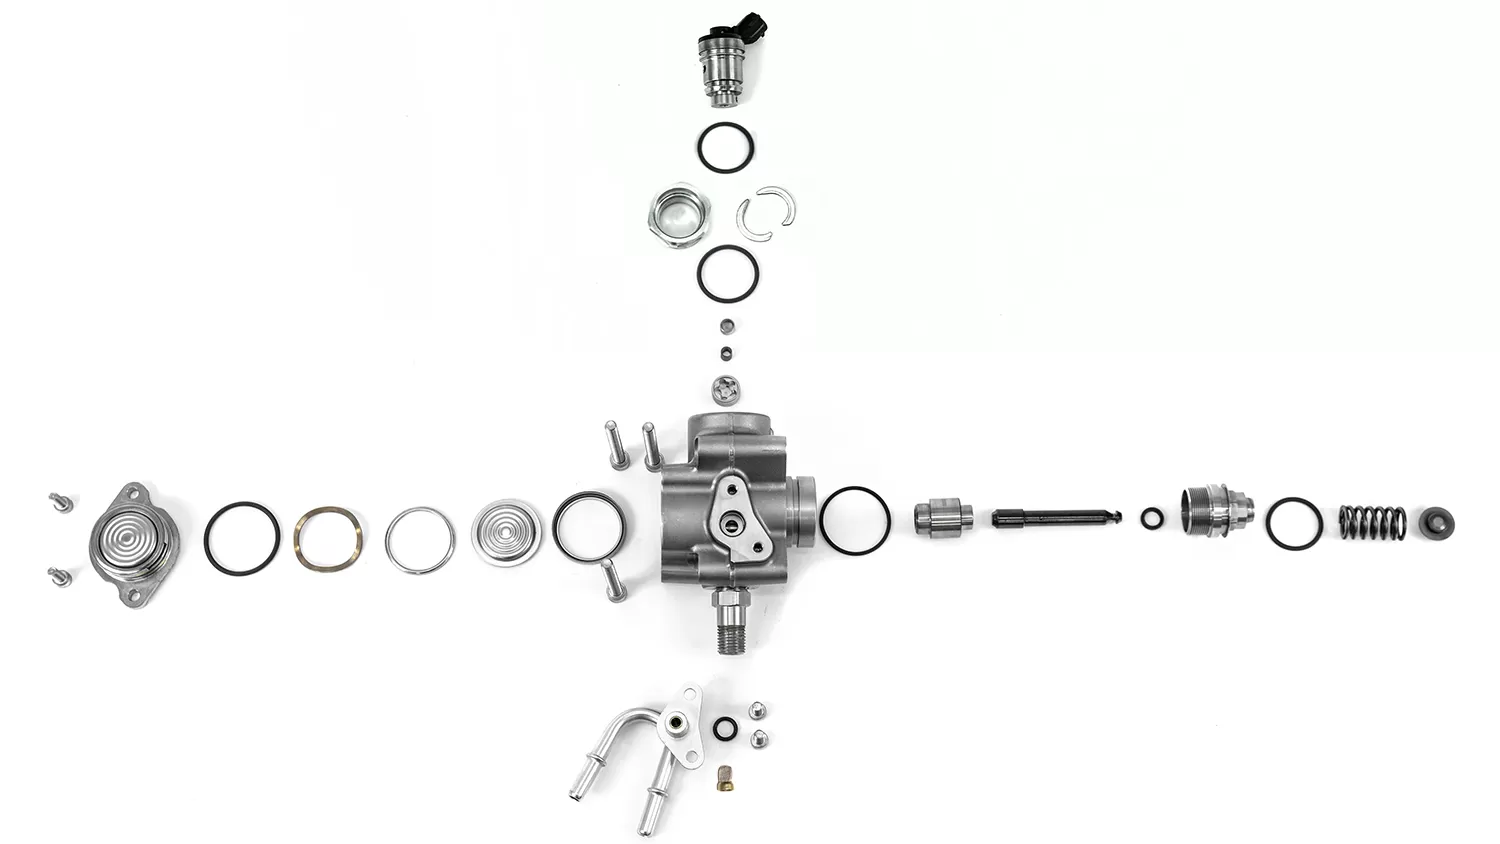 Mazdaspeed 6 high-pressure fuel pump rebuild kit